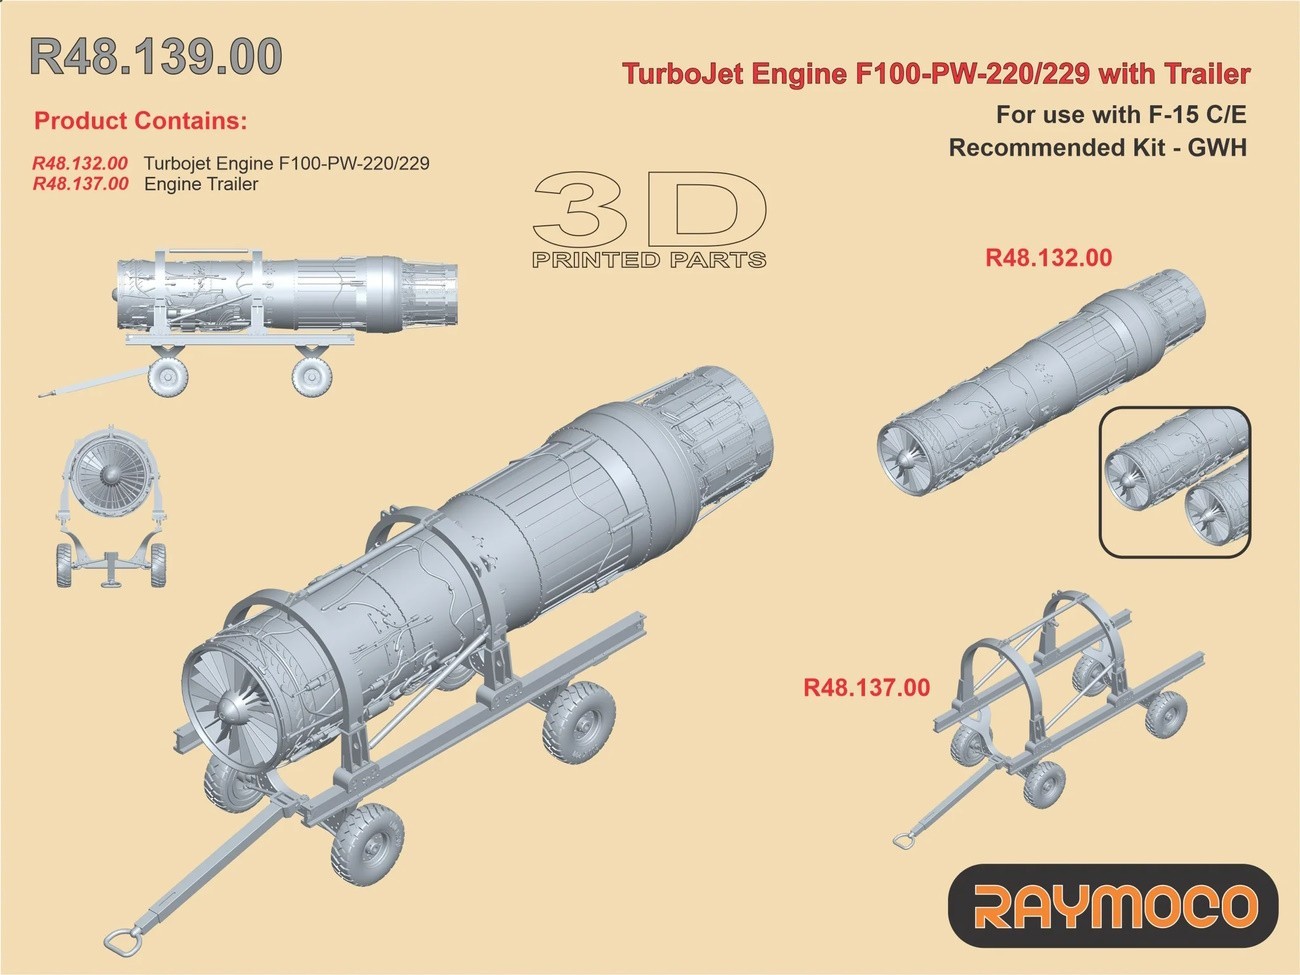 R48.139.00 – Jet Engine F100-PW-220/229 with Engine Trailer